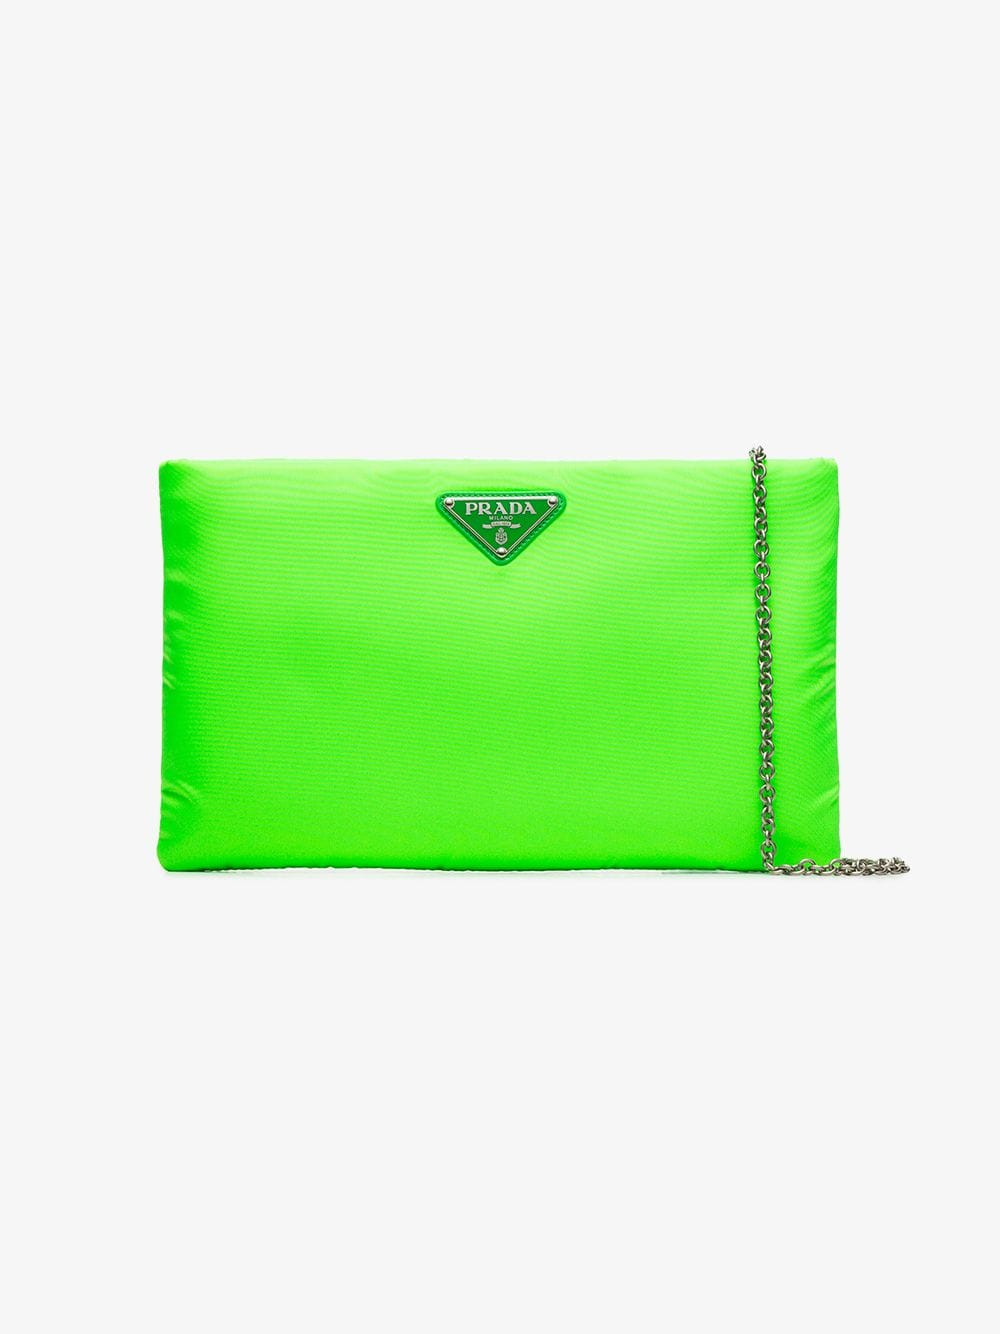 prada-fluorescent-green-logo-nylon-clutch-bag_13016481_14272780_1000.jpg